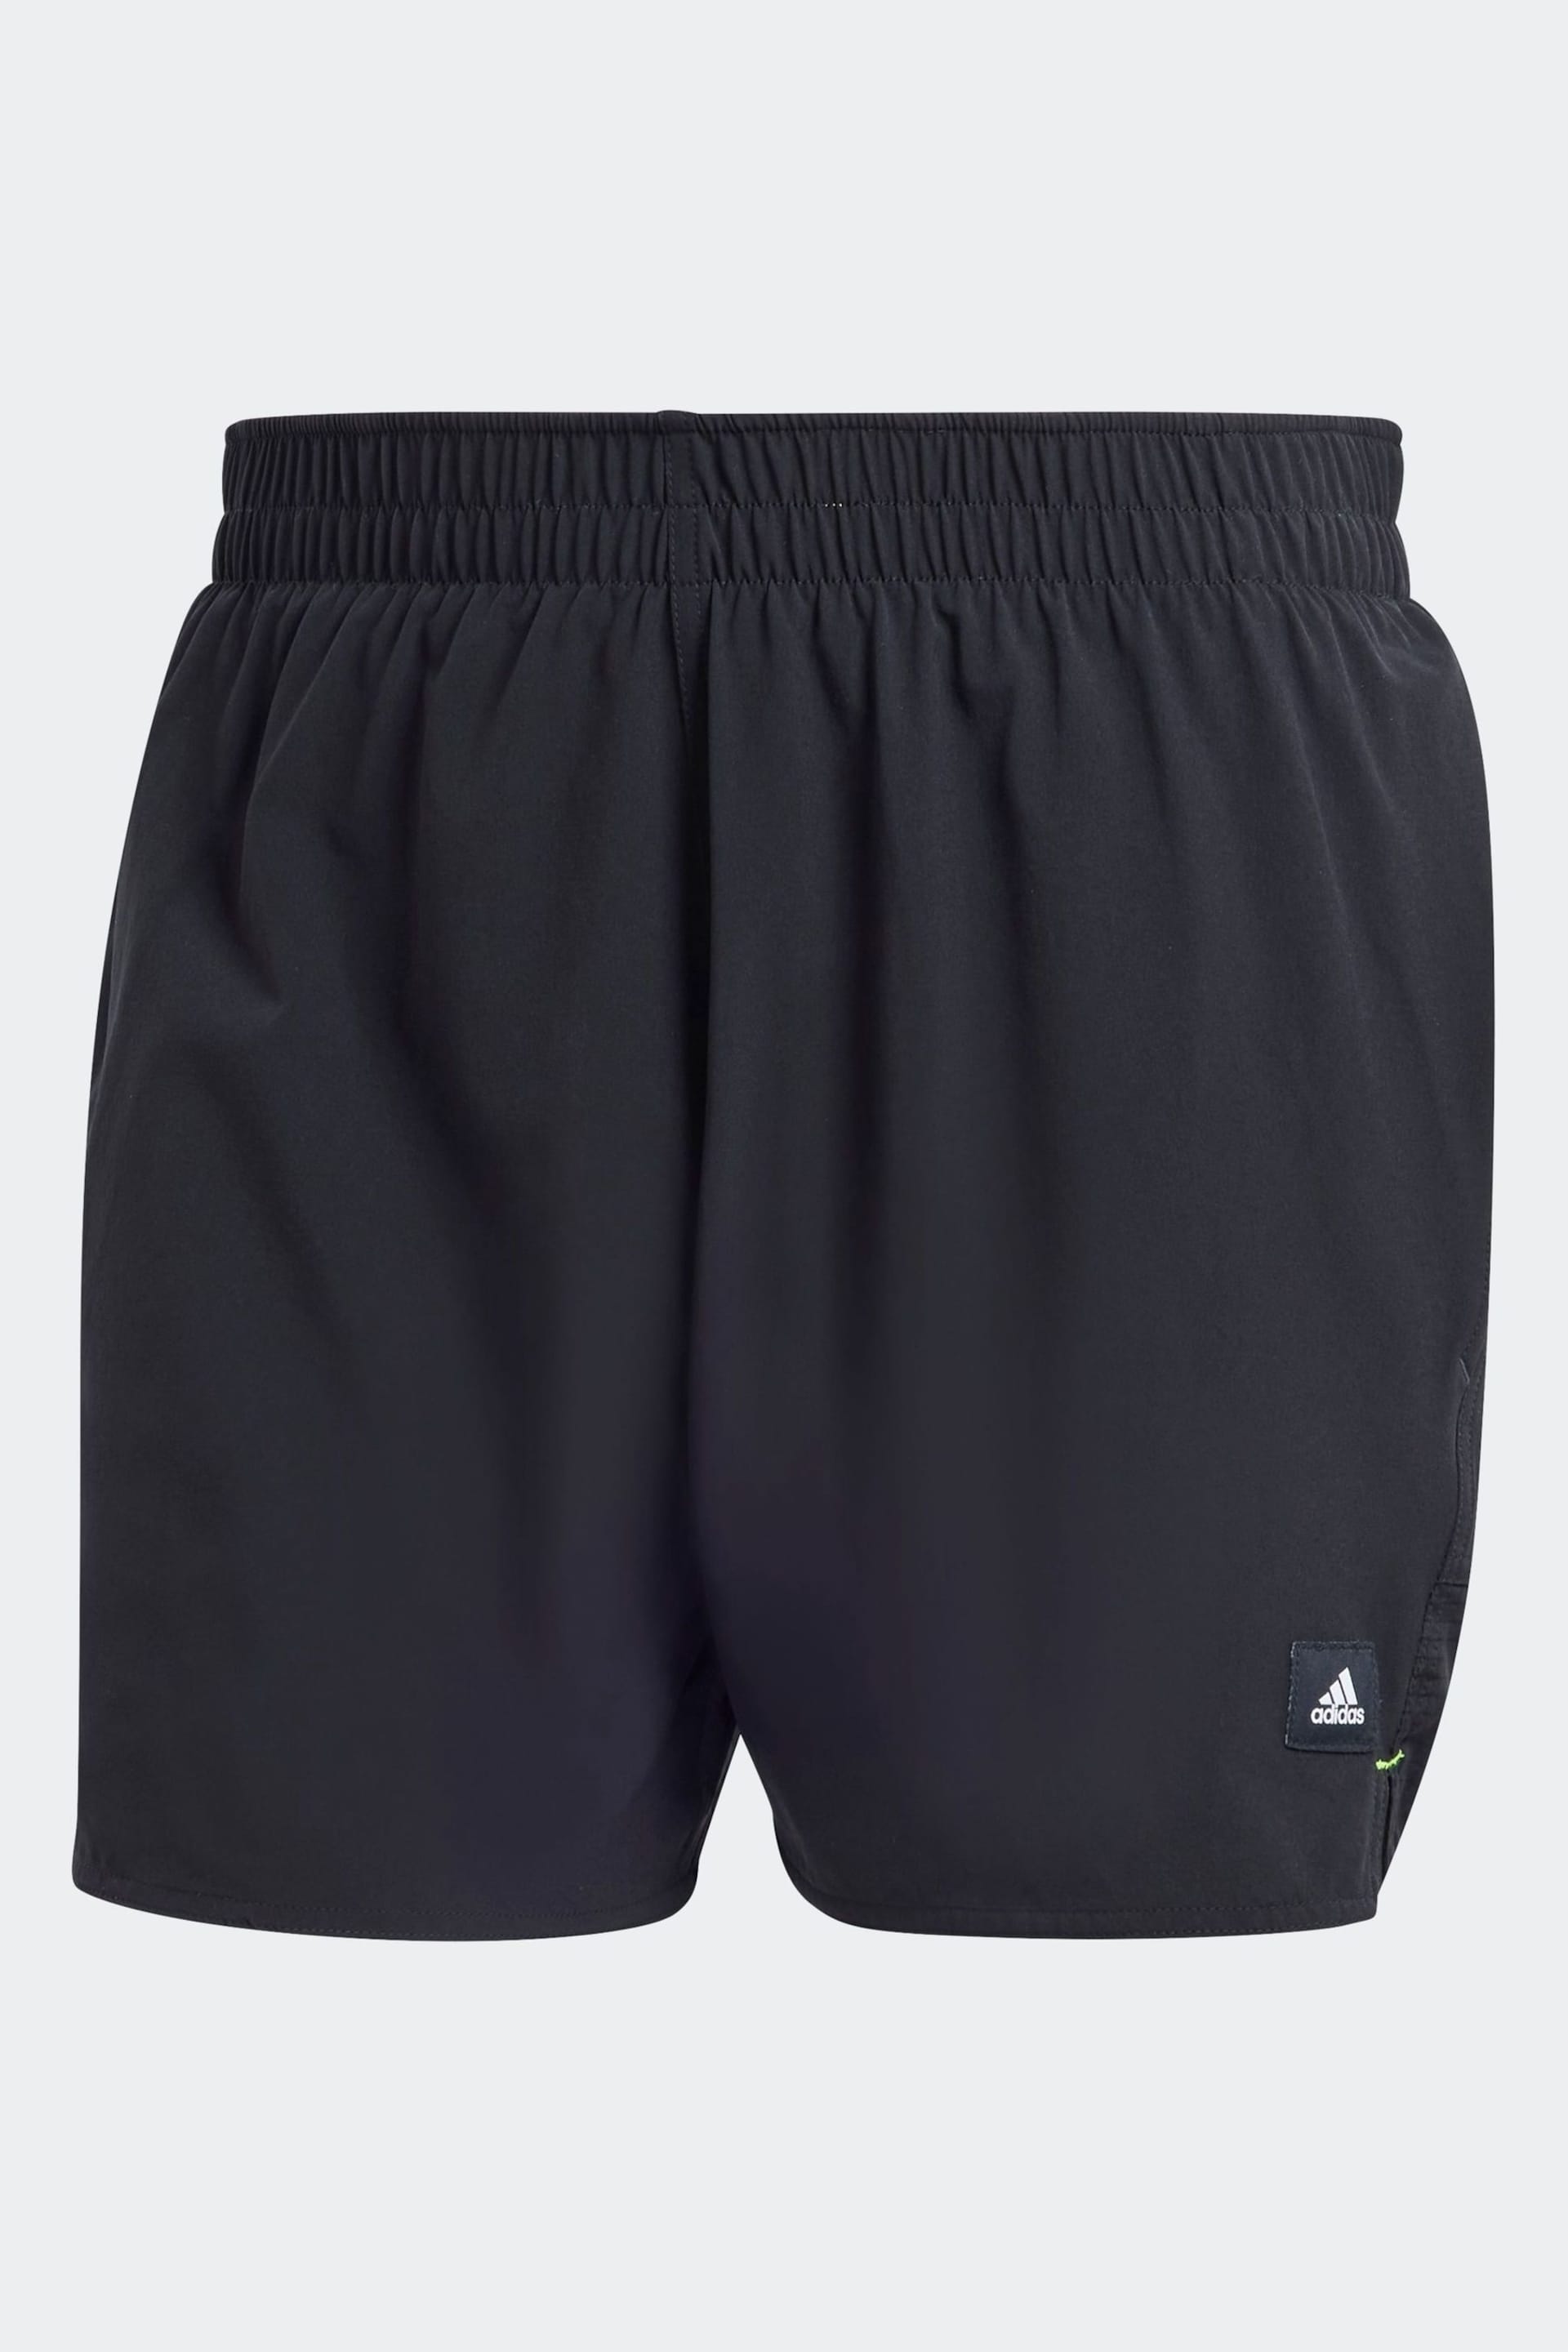 adidas Black Versatile Swim Shorts - Image 6 of 6